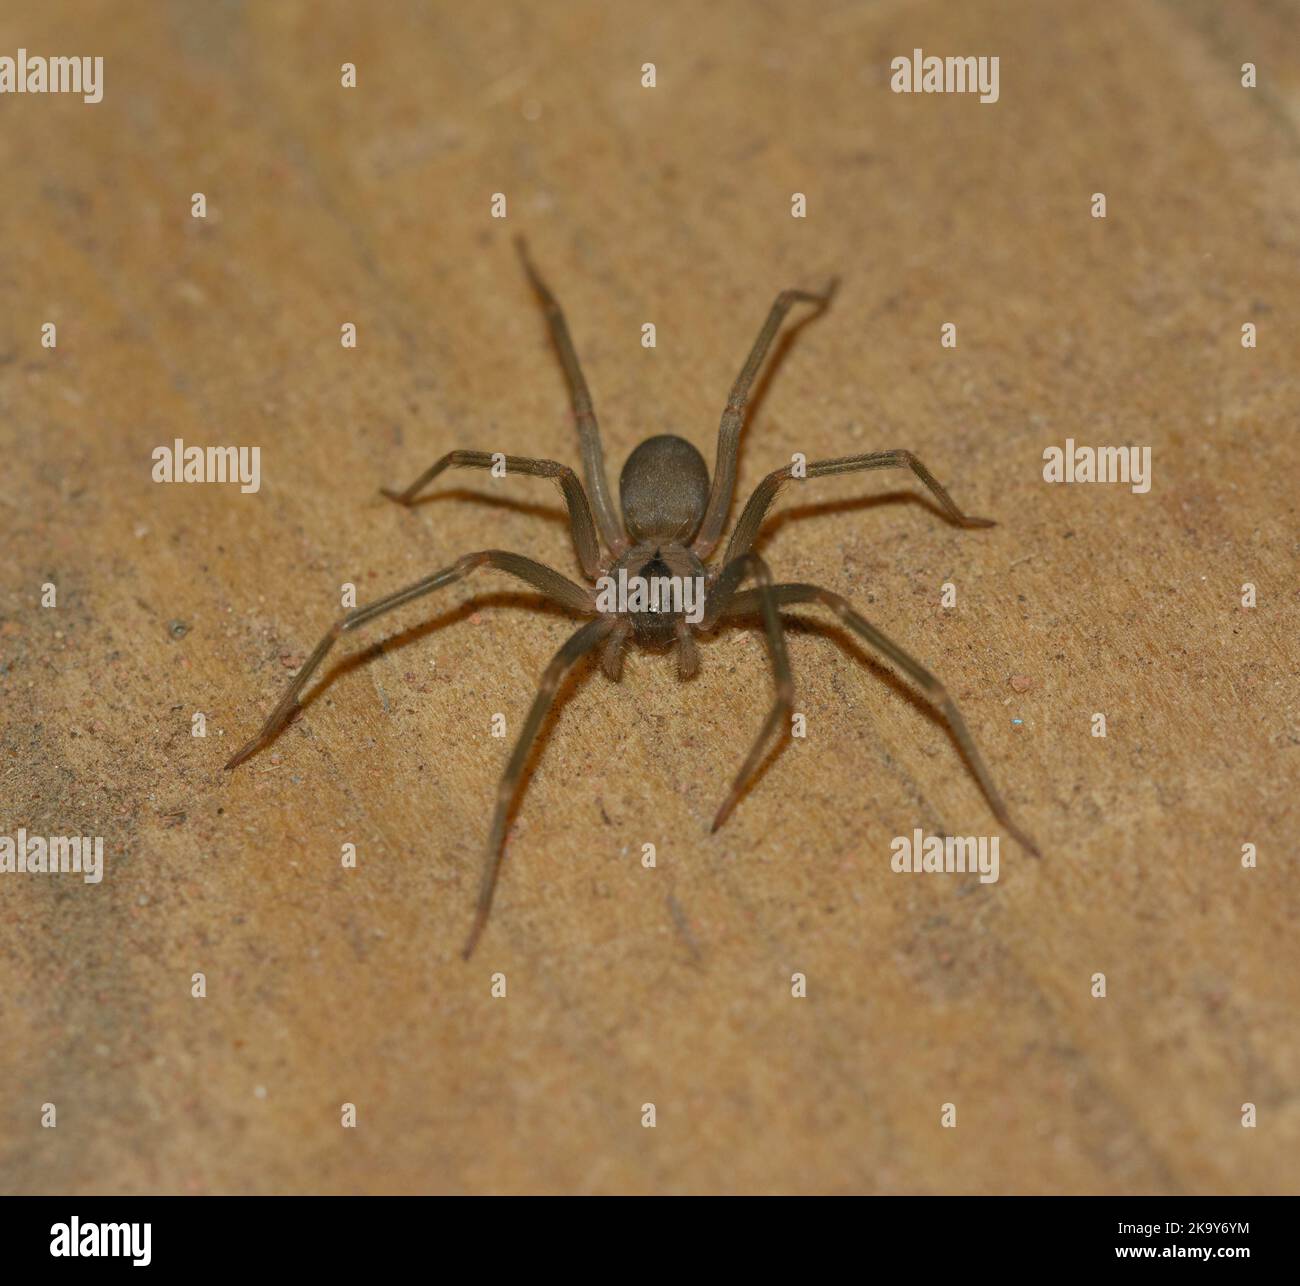 Araña reclusa marrón sobre madera de color claro, vista frontal Foto de stock